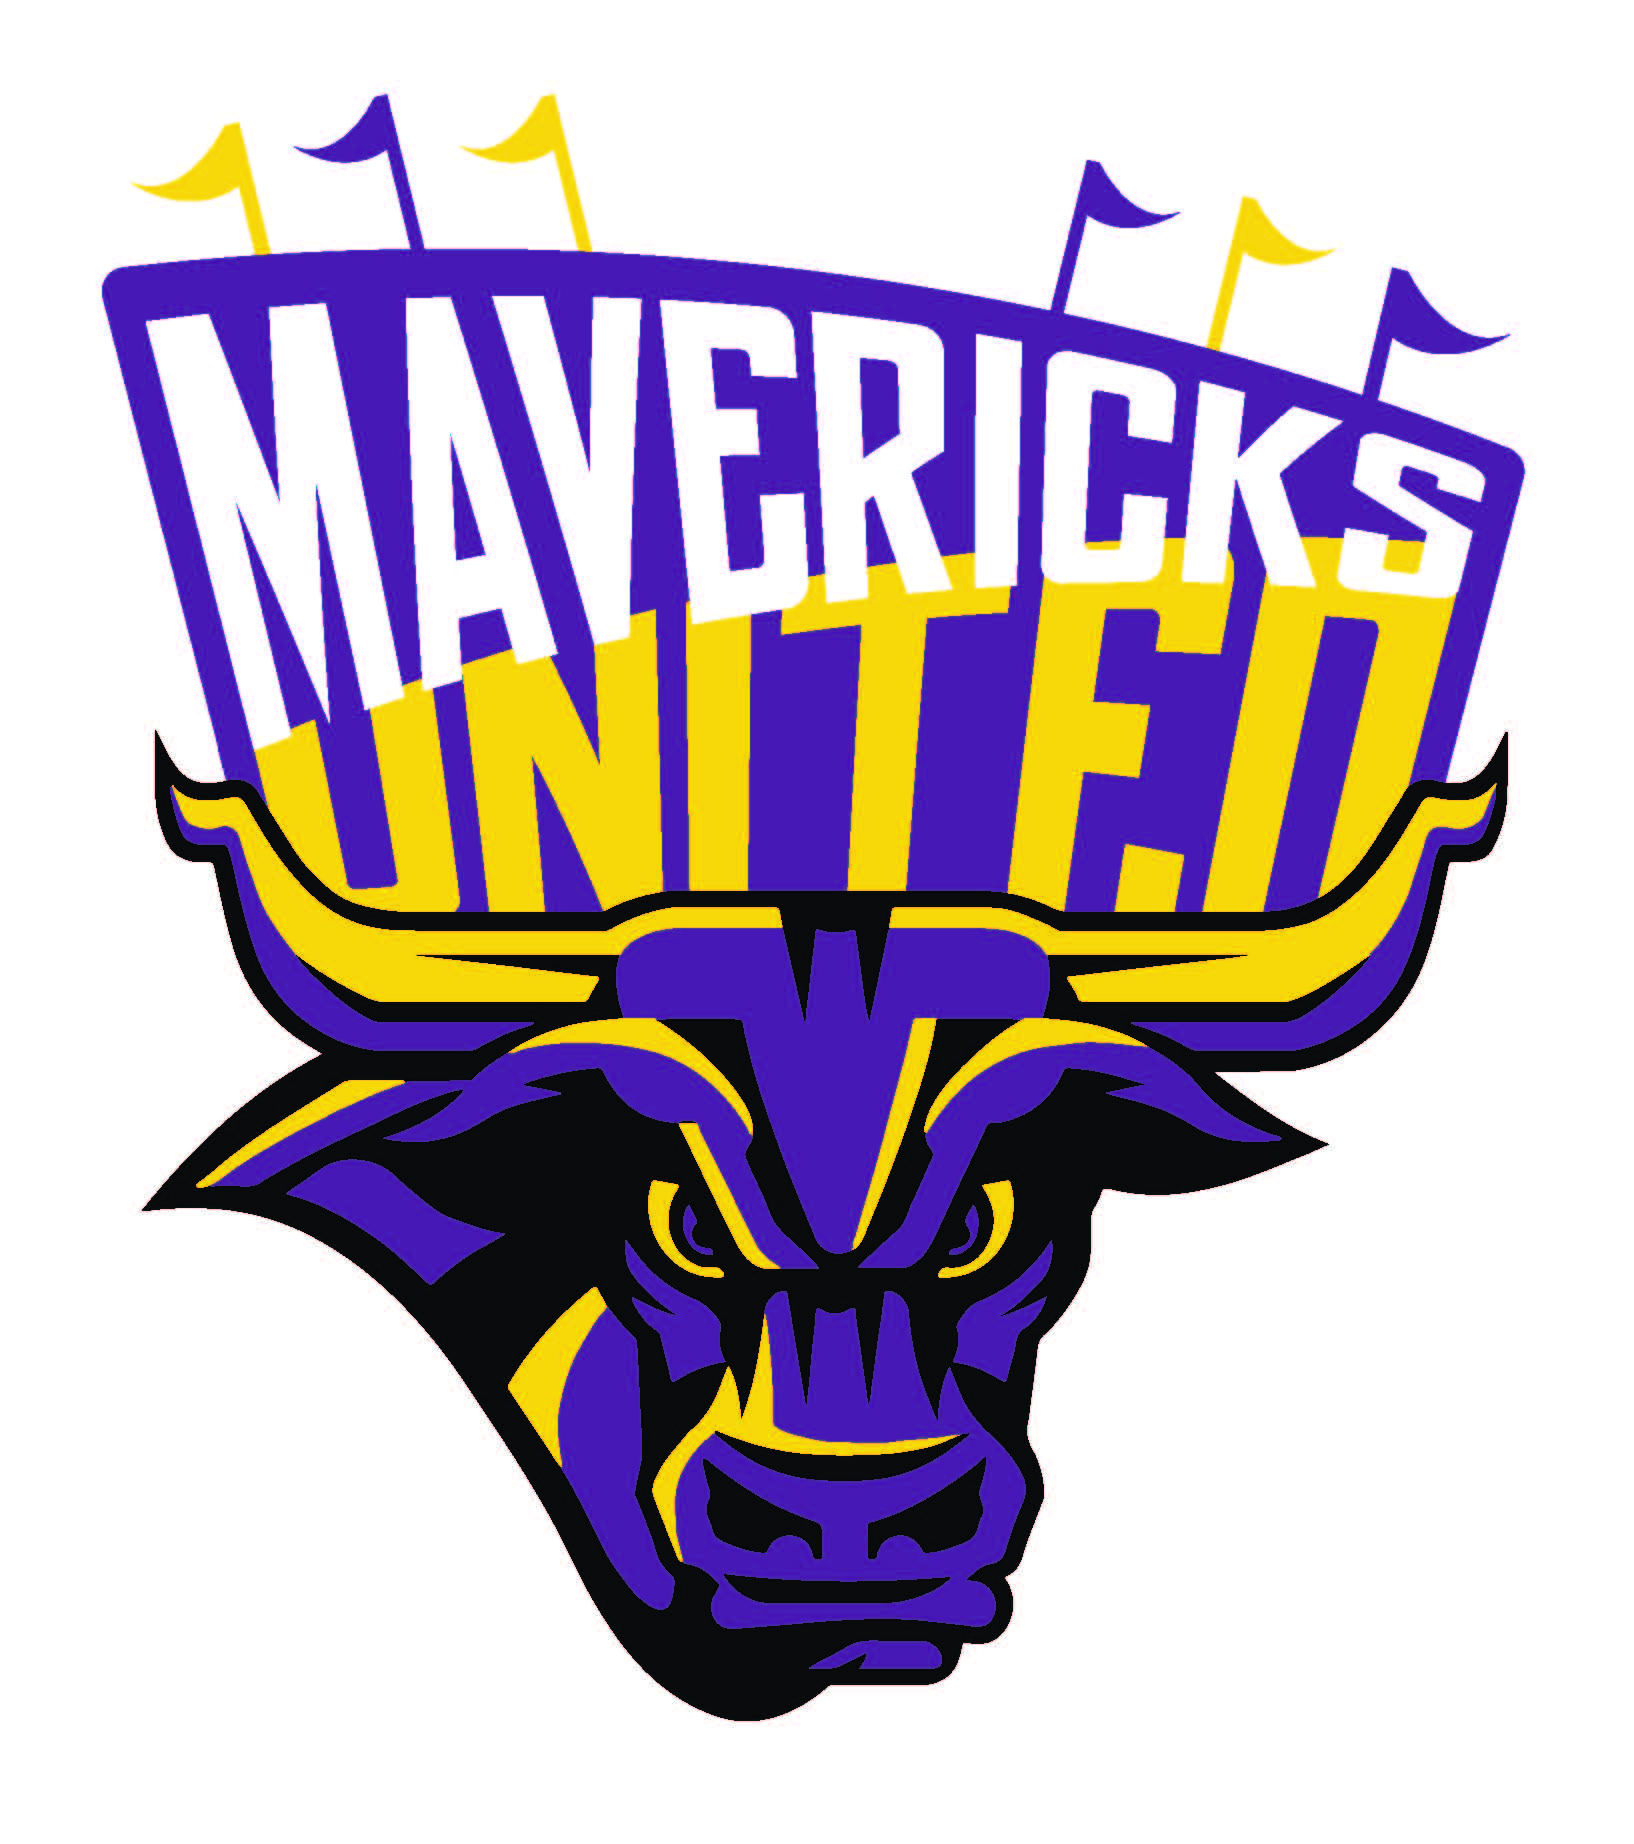 Maerick head with words Mavericks united above the shirt.